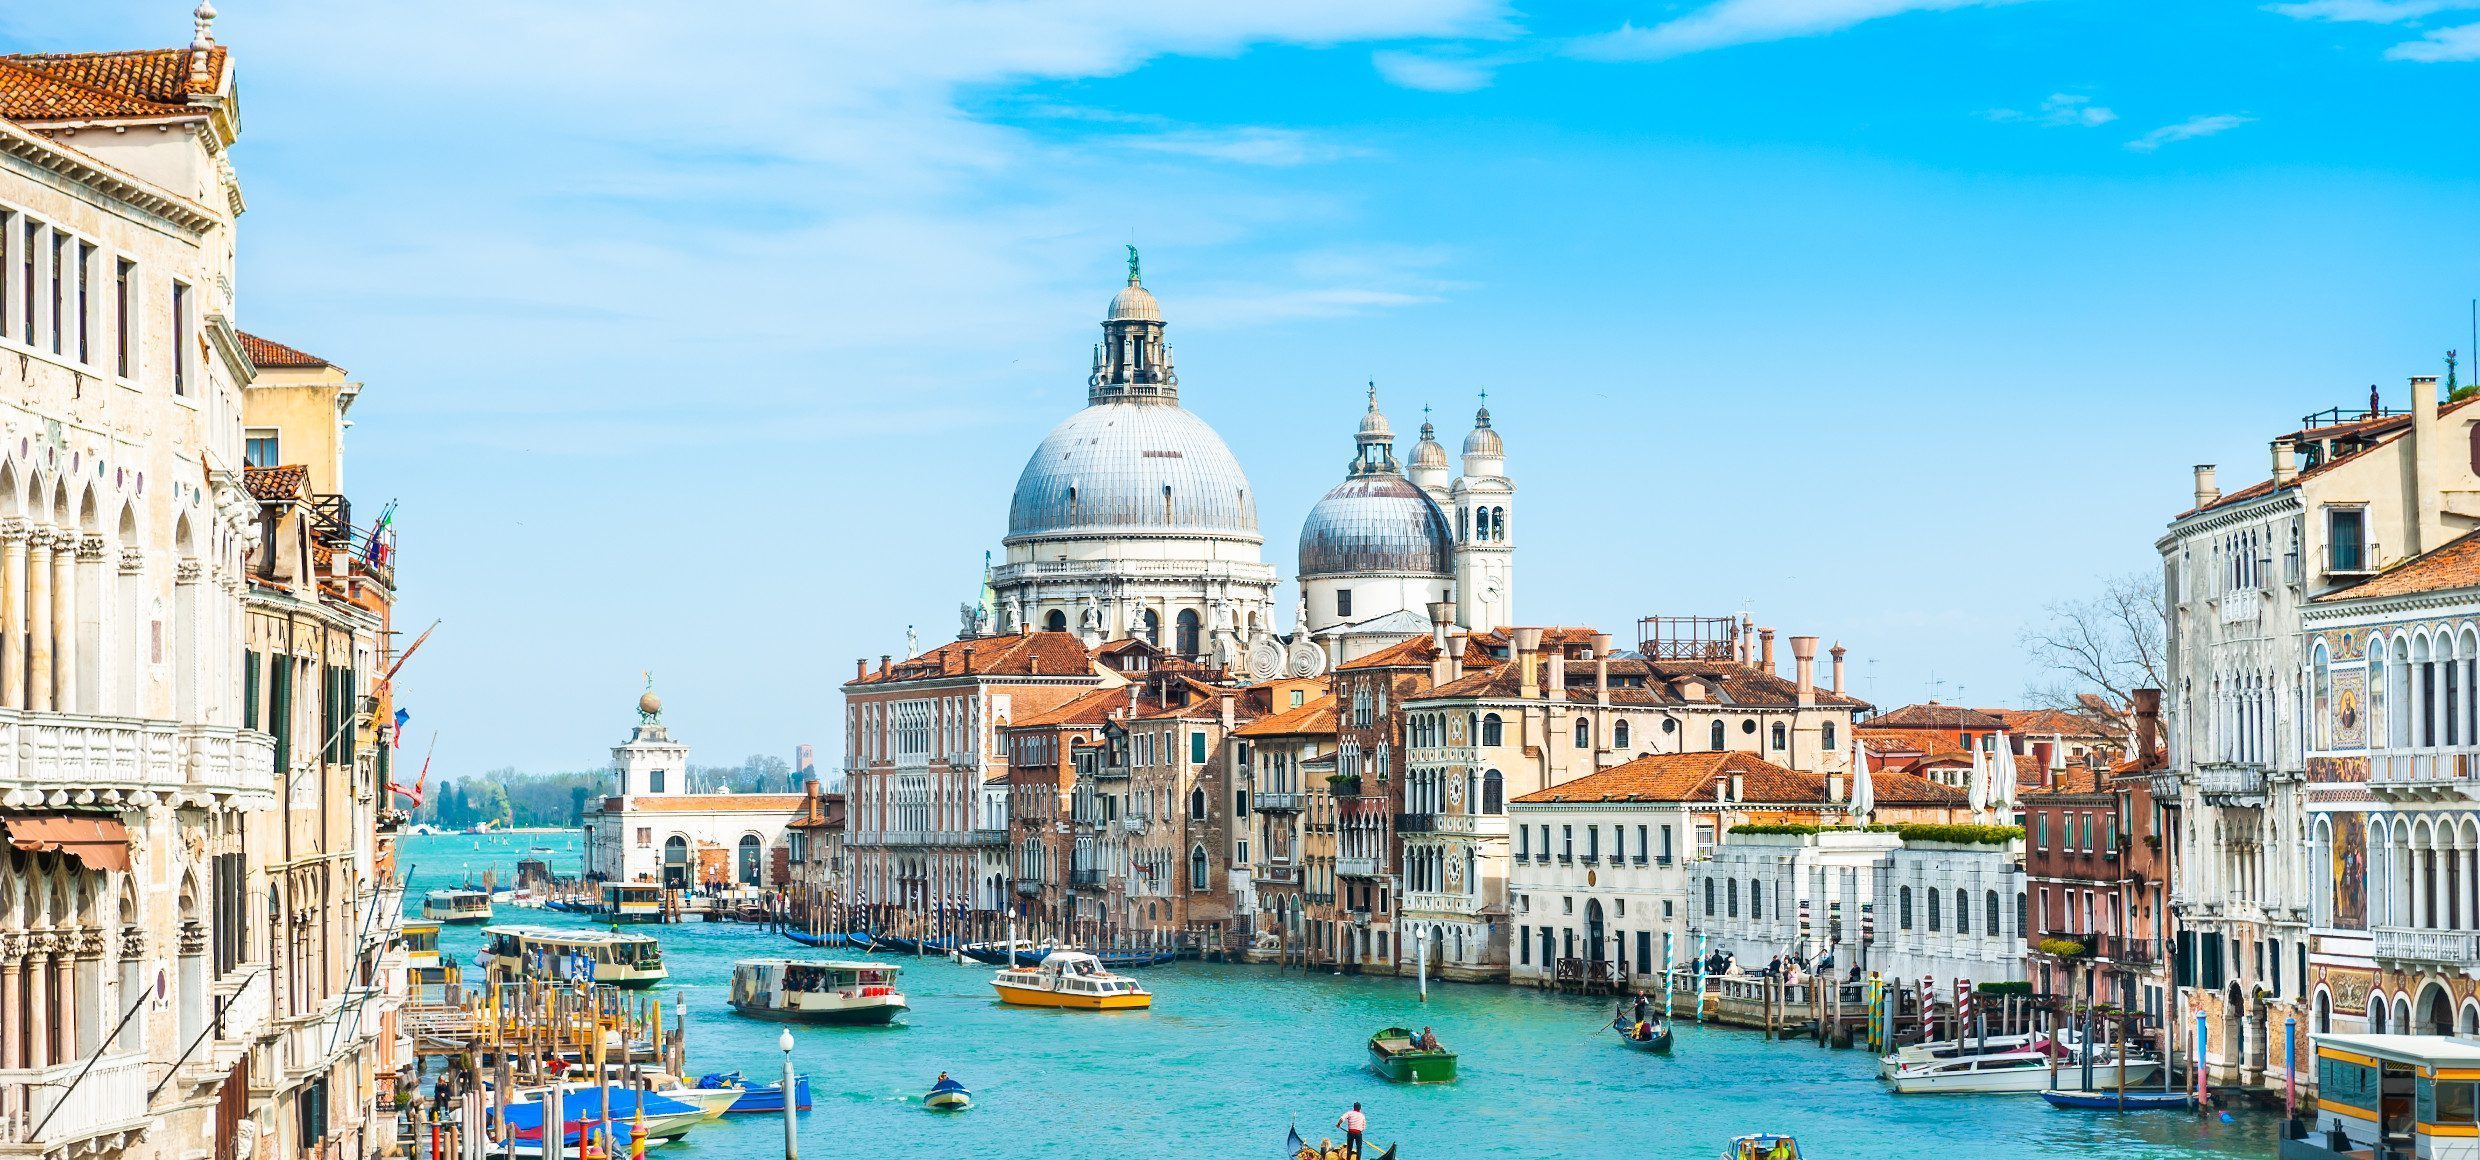 Kanal-Wasser-Boote-Basilica Santa Maria della Salute-Venedig-Italien